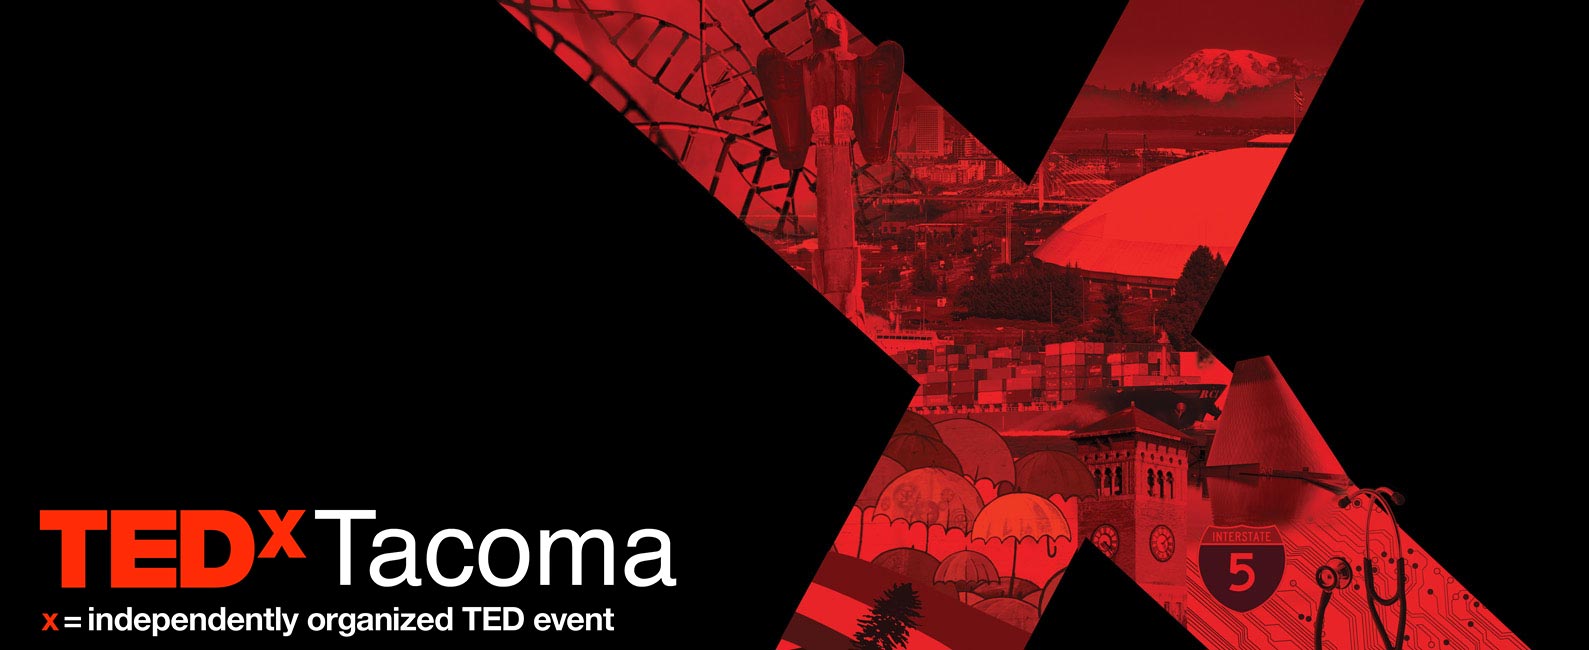 TEDx Tacoma Website banner